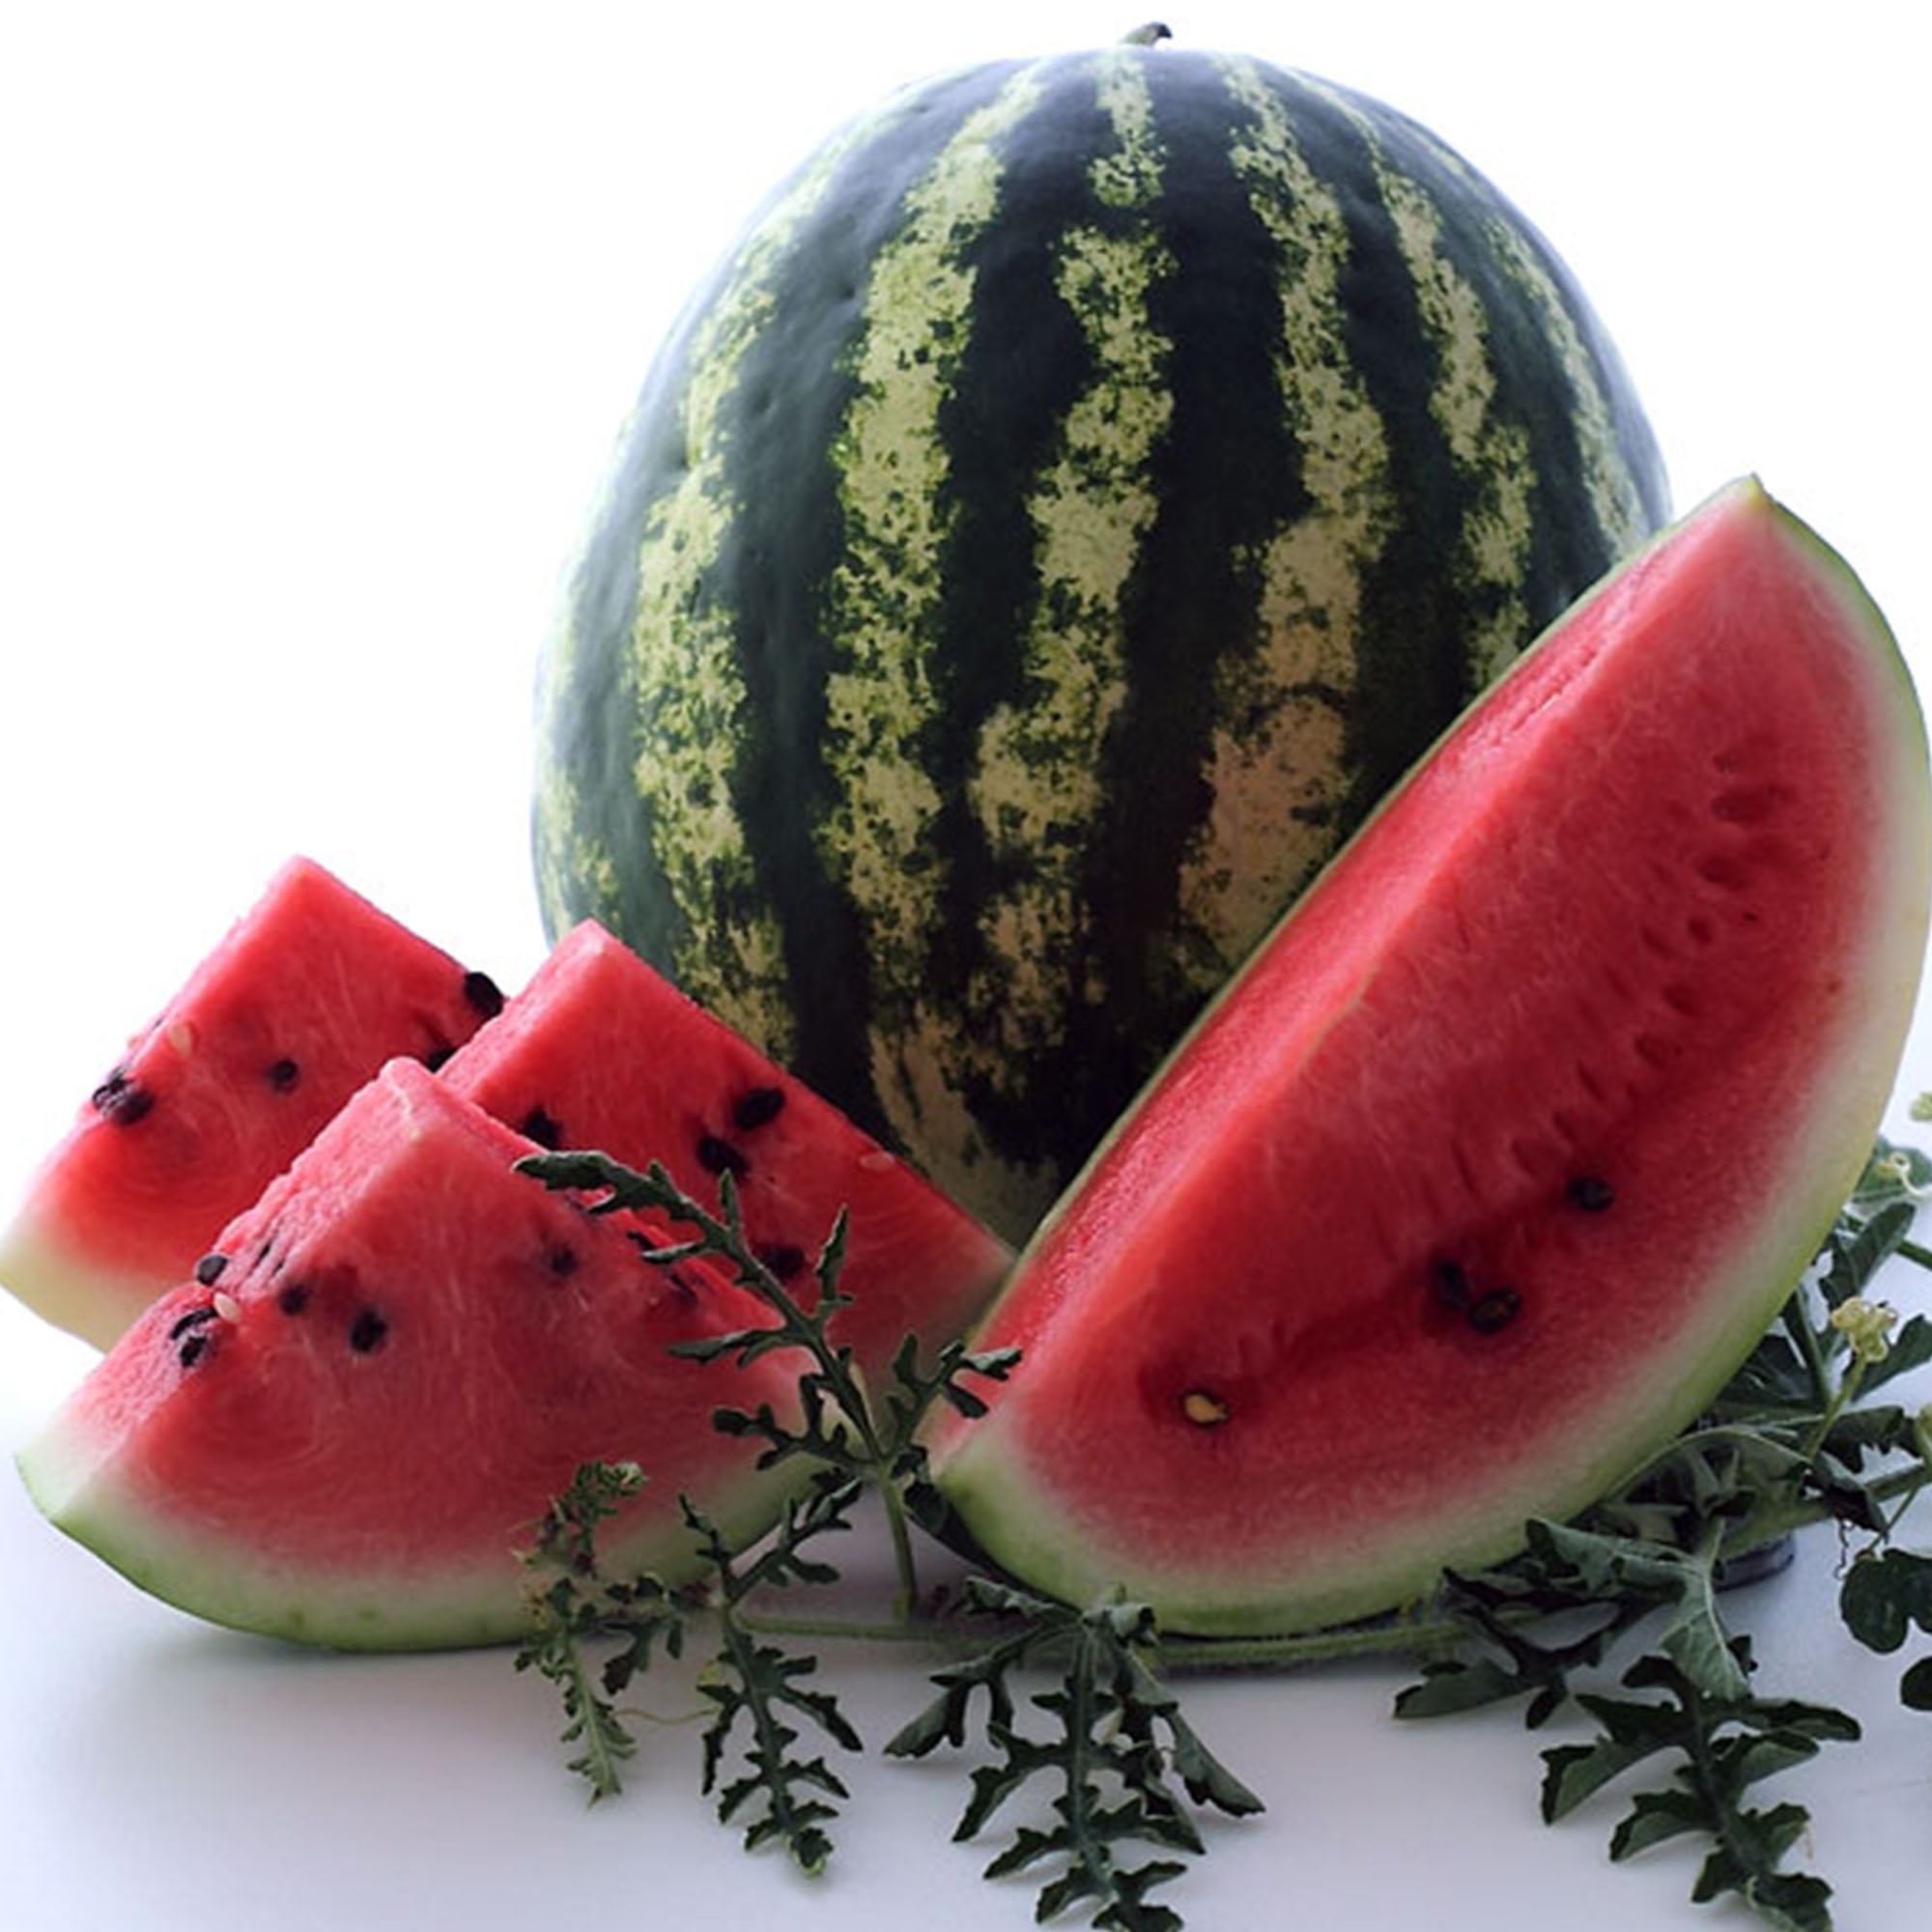 CRIMSON SWEET WATERMELON FRUIT SEEDS VEGETABLE GARDEN HEIRLOOM NON-GMO